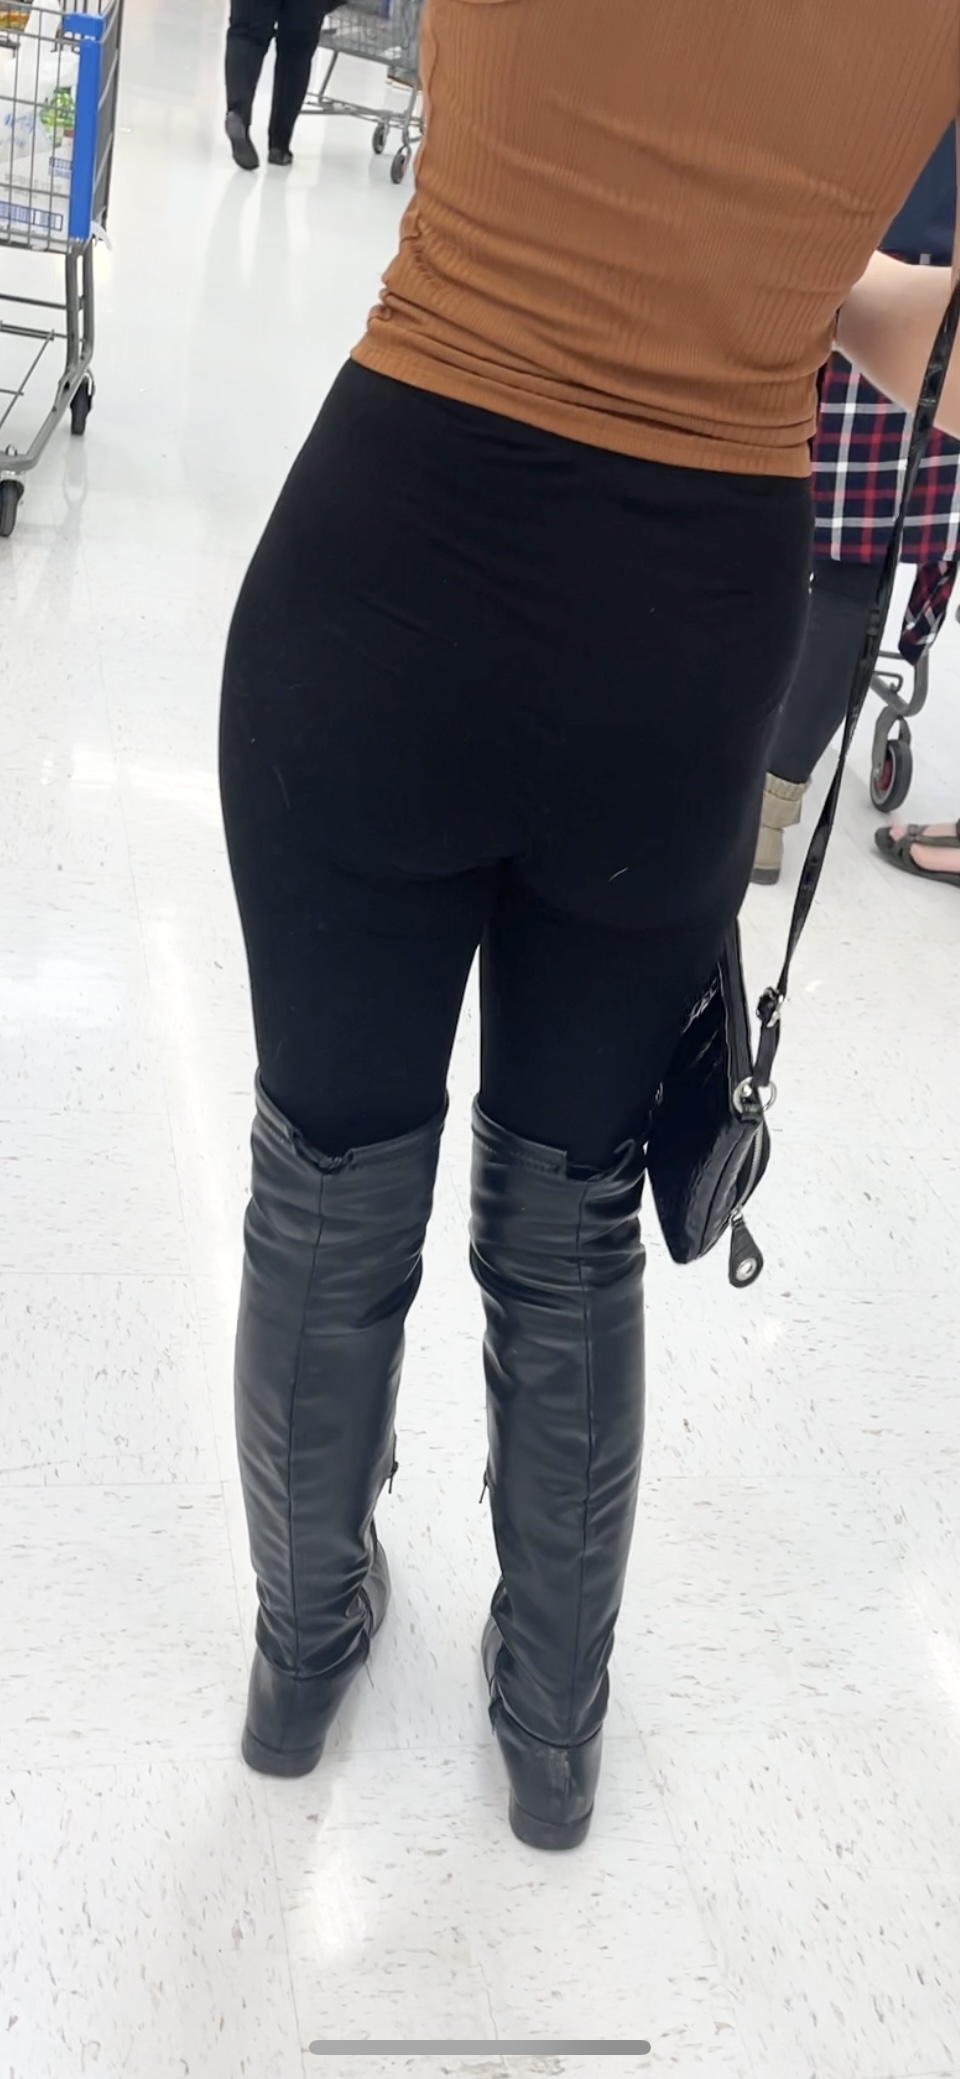 Tight teen in black leggings - Spandex, Leggings & Yoga Pants - Forum